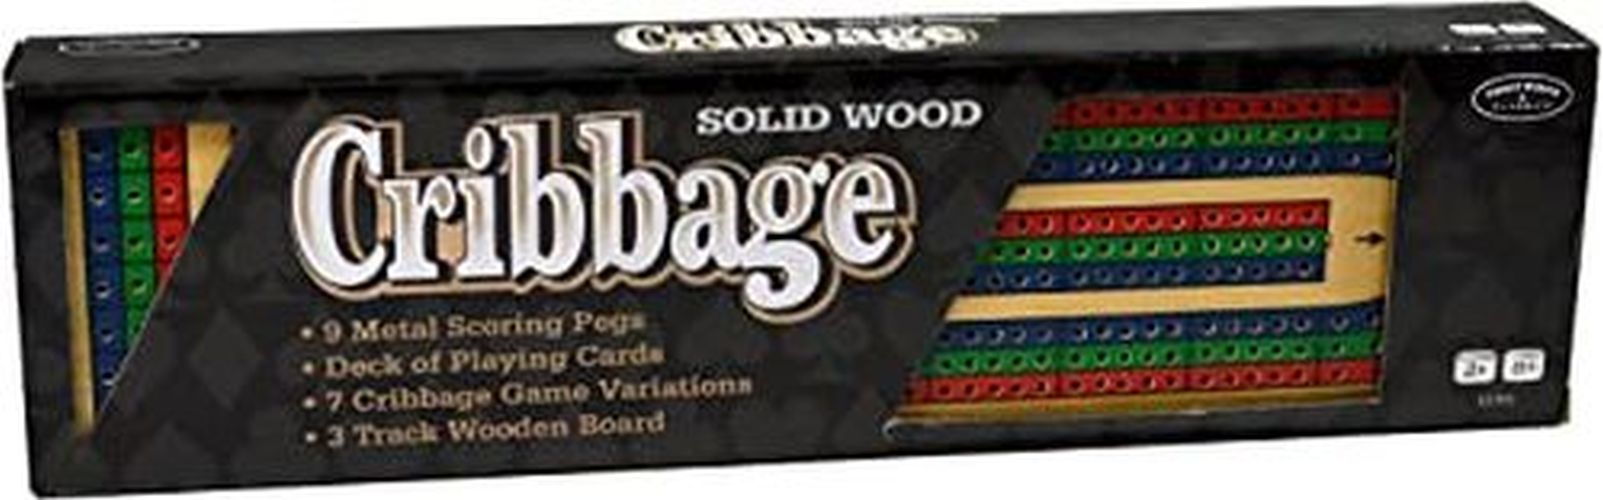 UNIVERSITY GAMES Cribbage Solid Wood Game - 